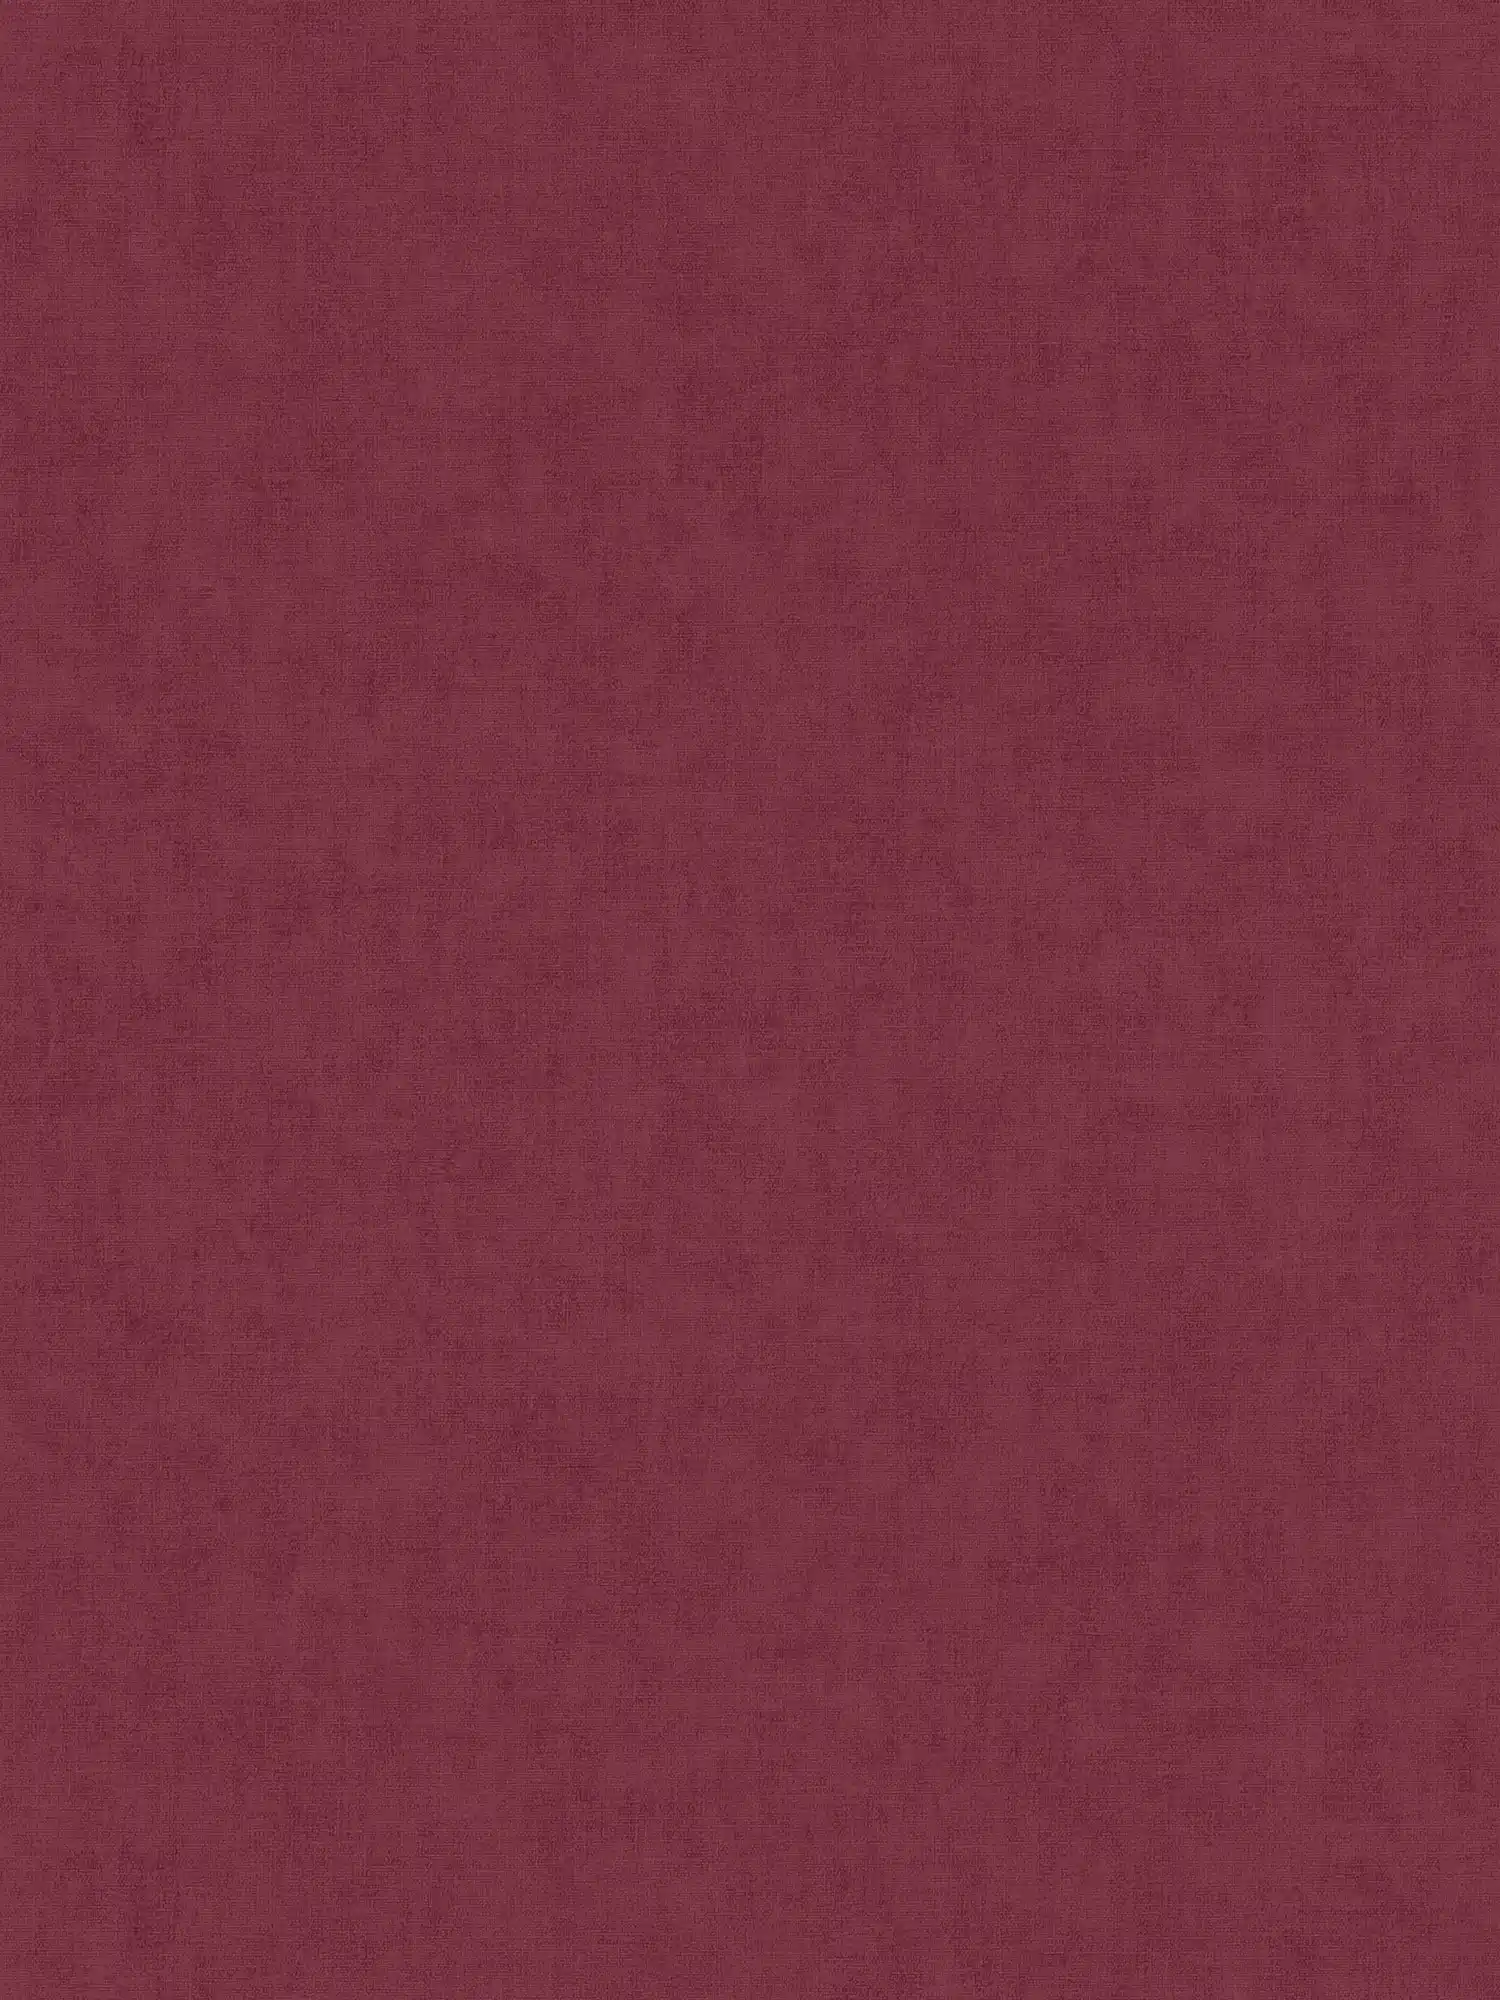 Non-woven wallpaper textile look Scandinavian style - red
